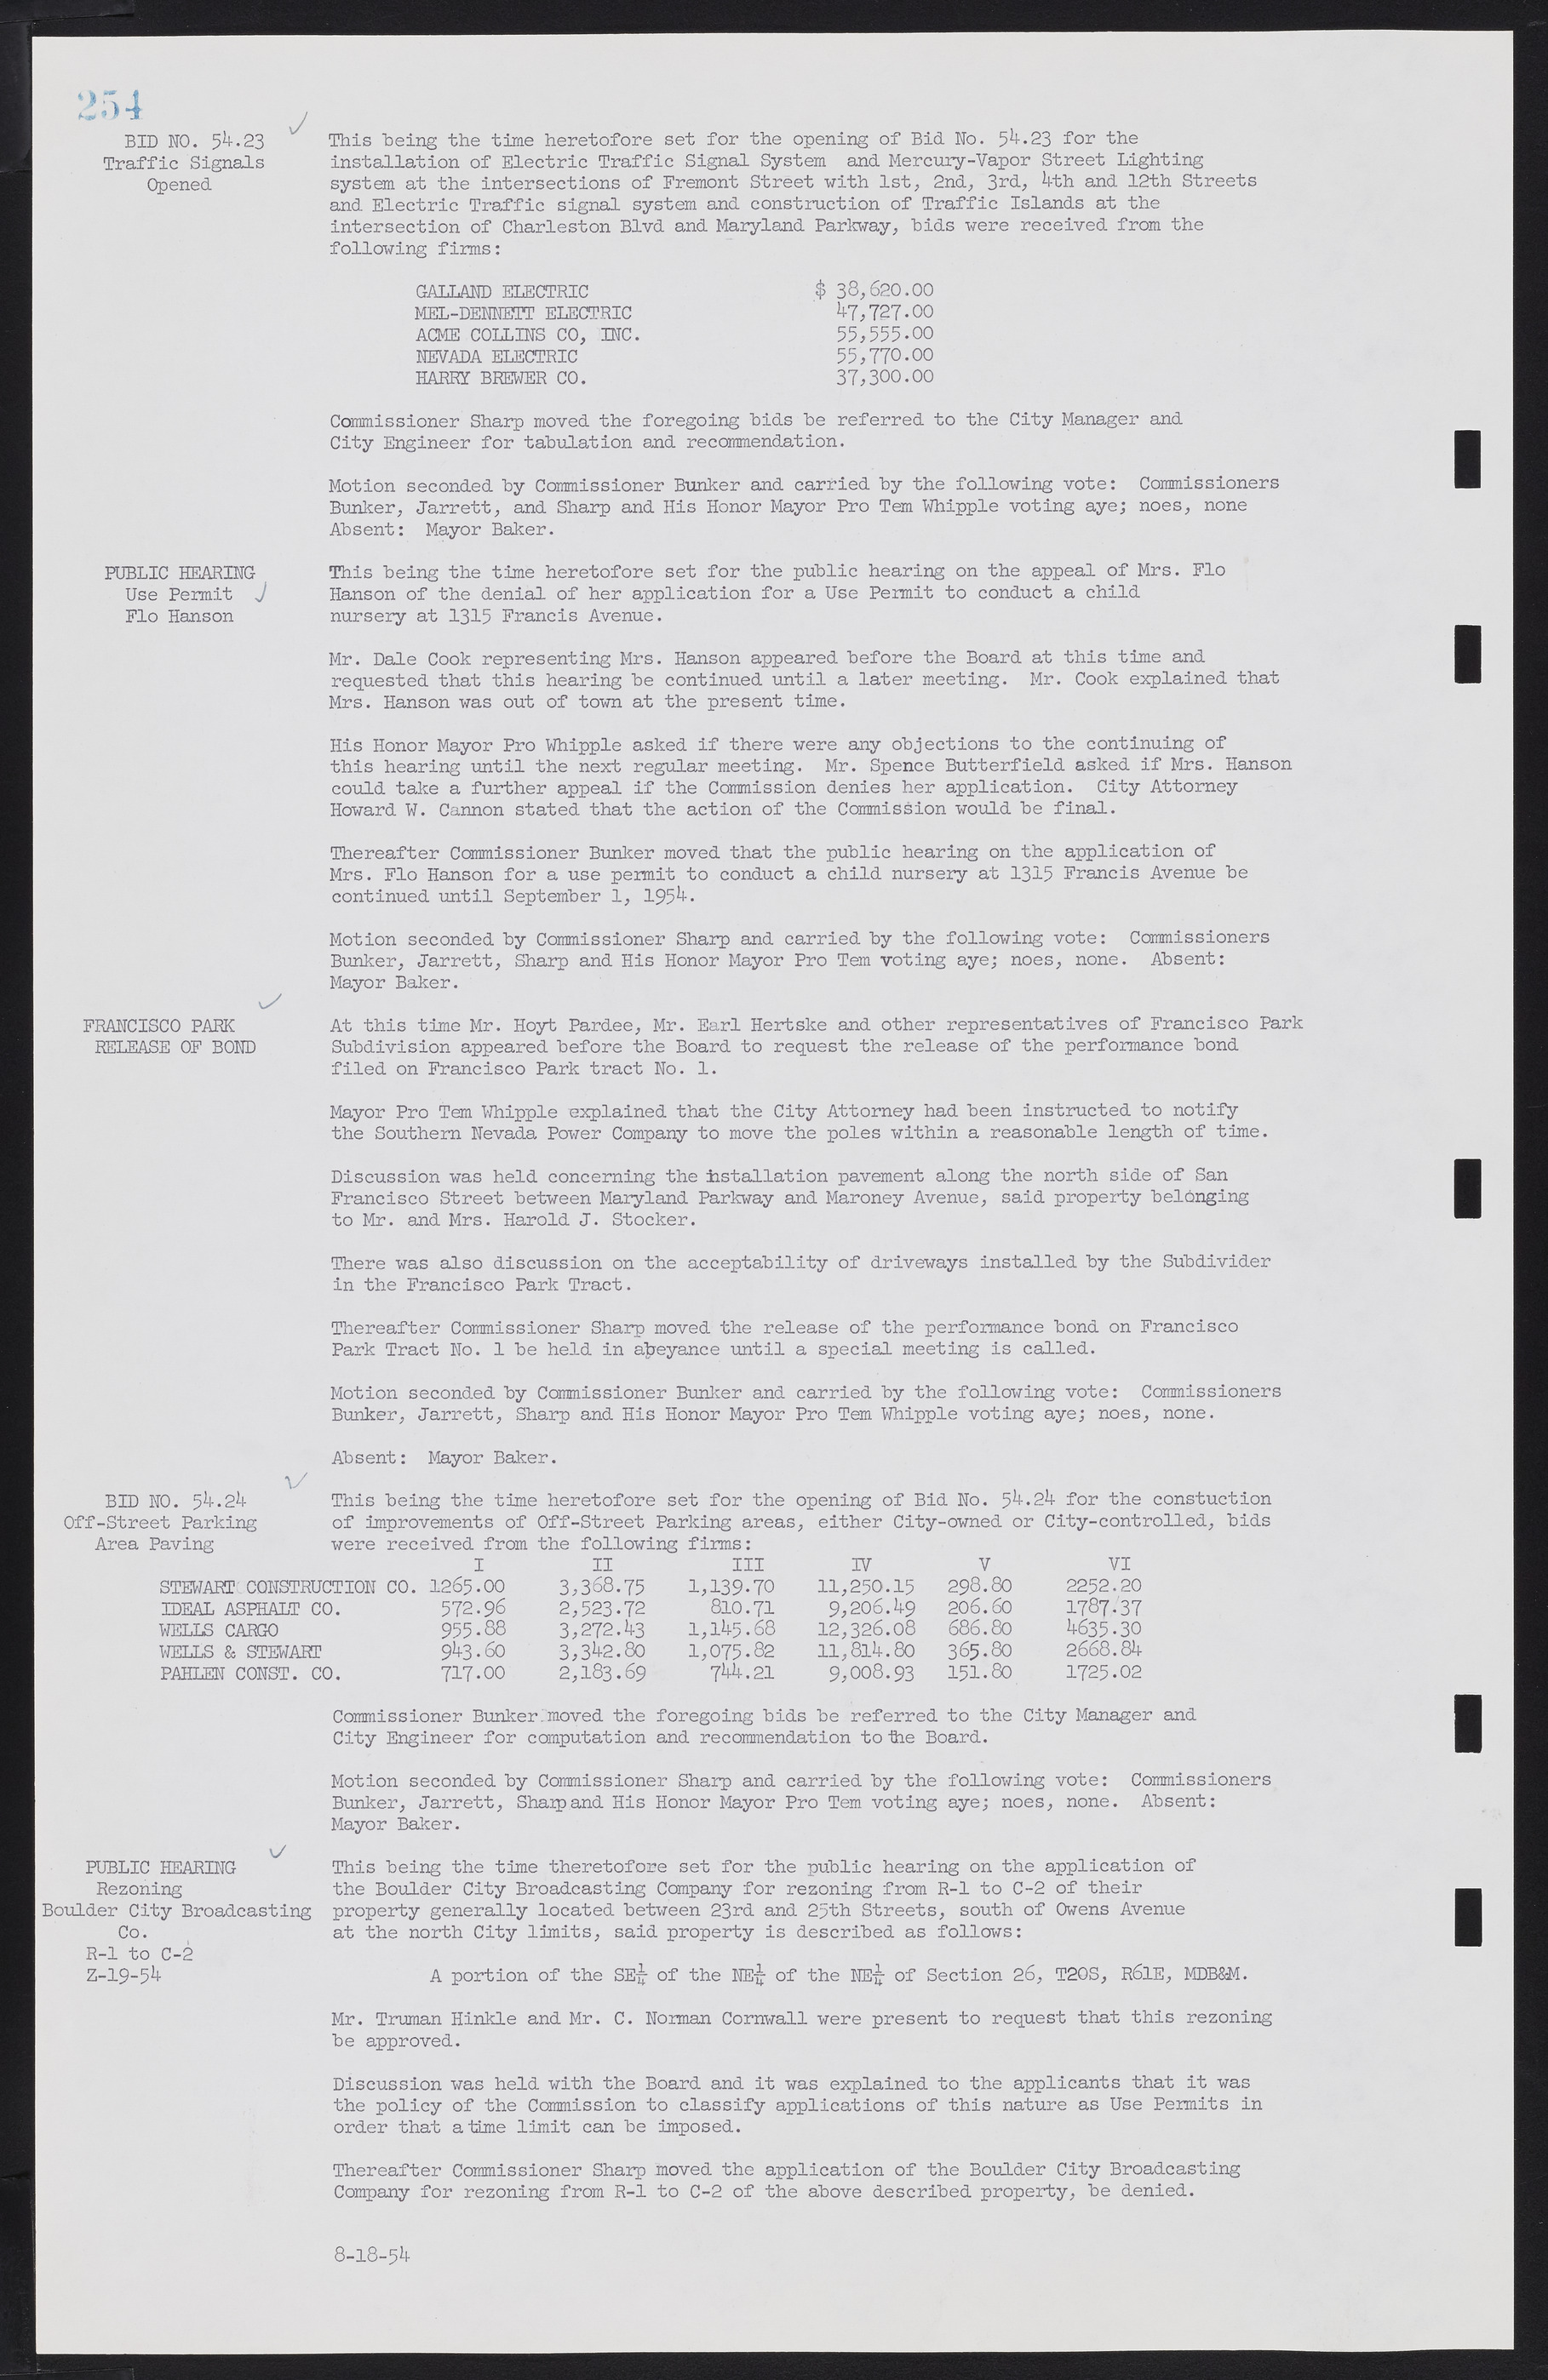 Las Vegas City Commission Minutes, February 17, 1954 to September 21, 1955, lvc000009-260